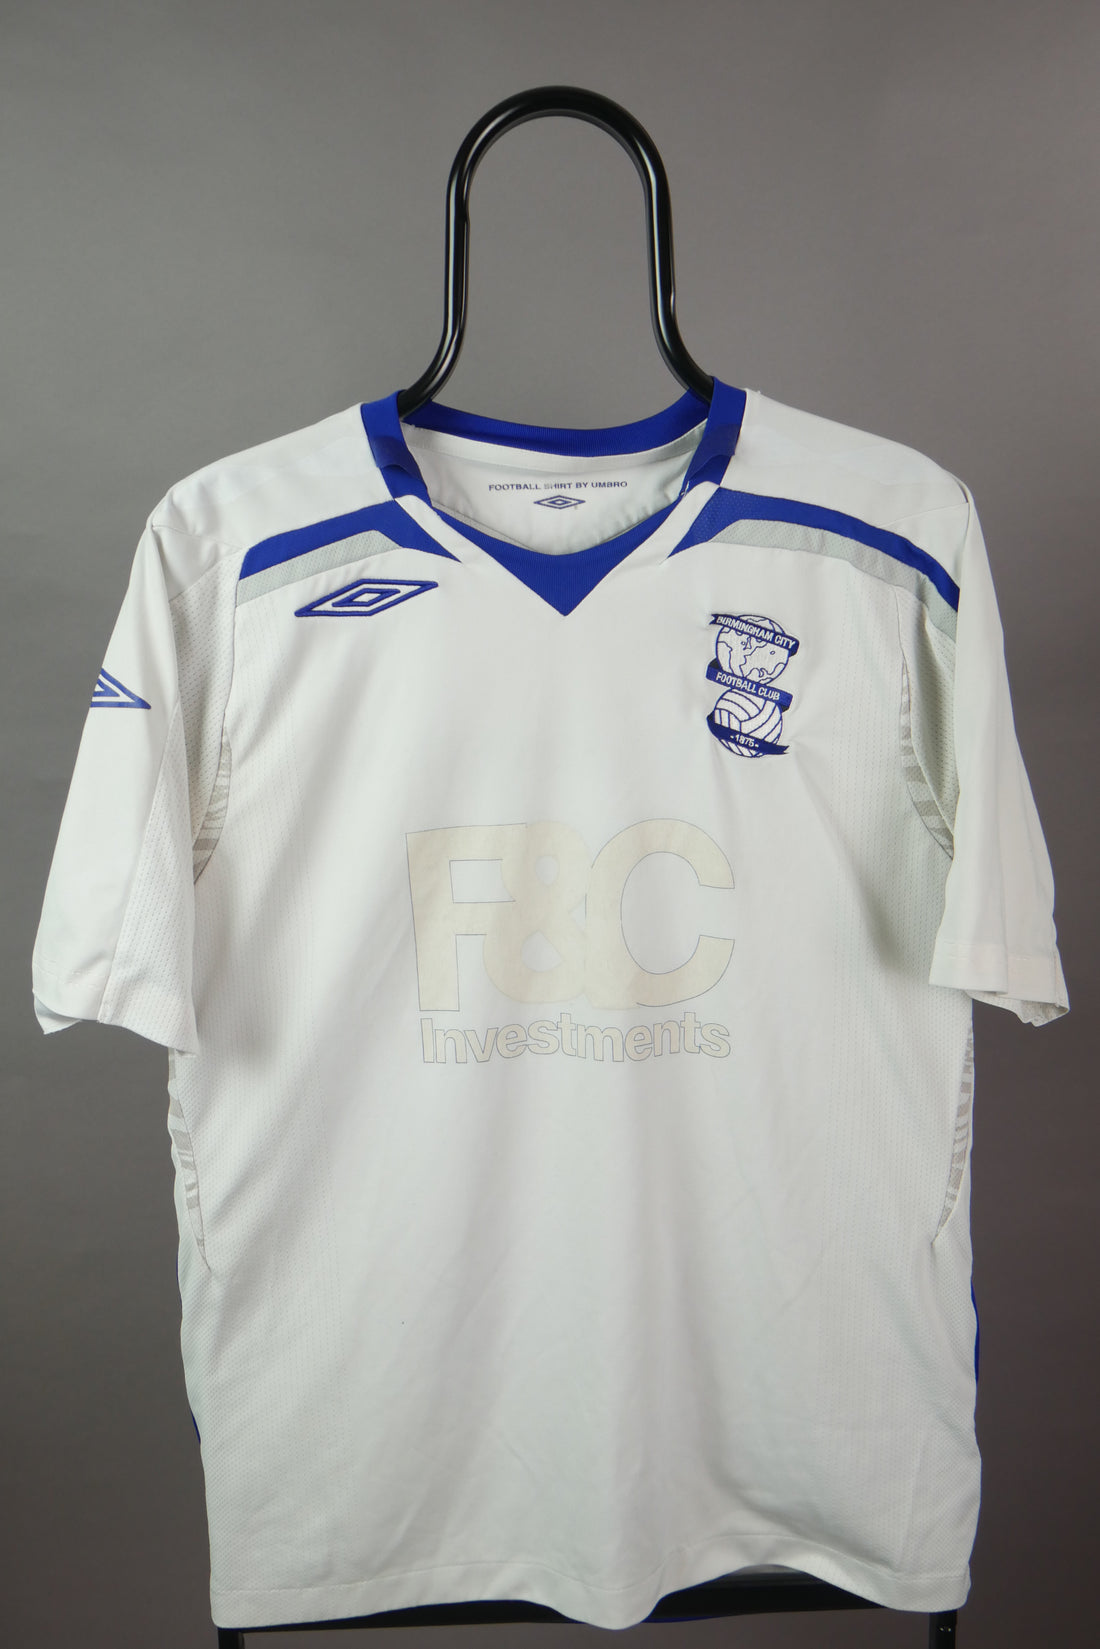 The Umbro Birmingham Football Shirt (M)